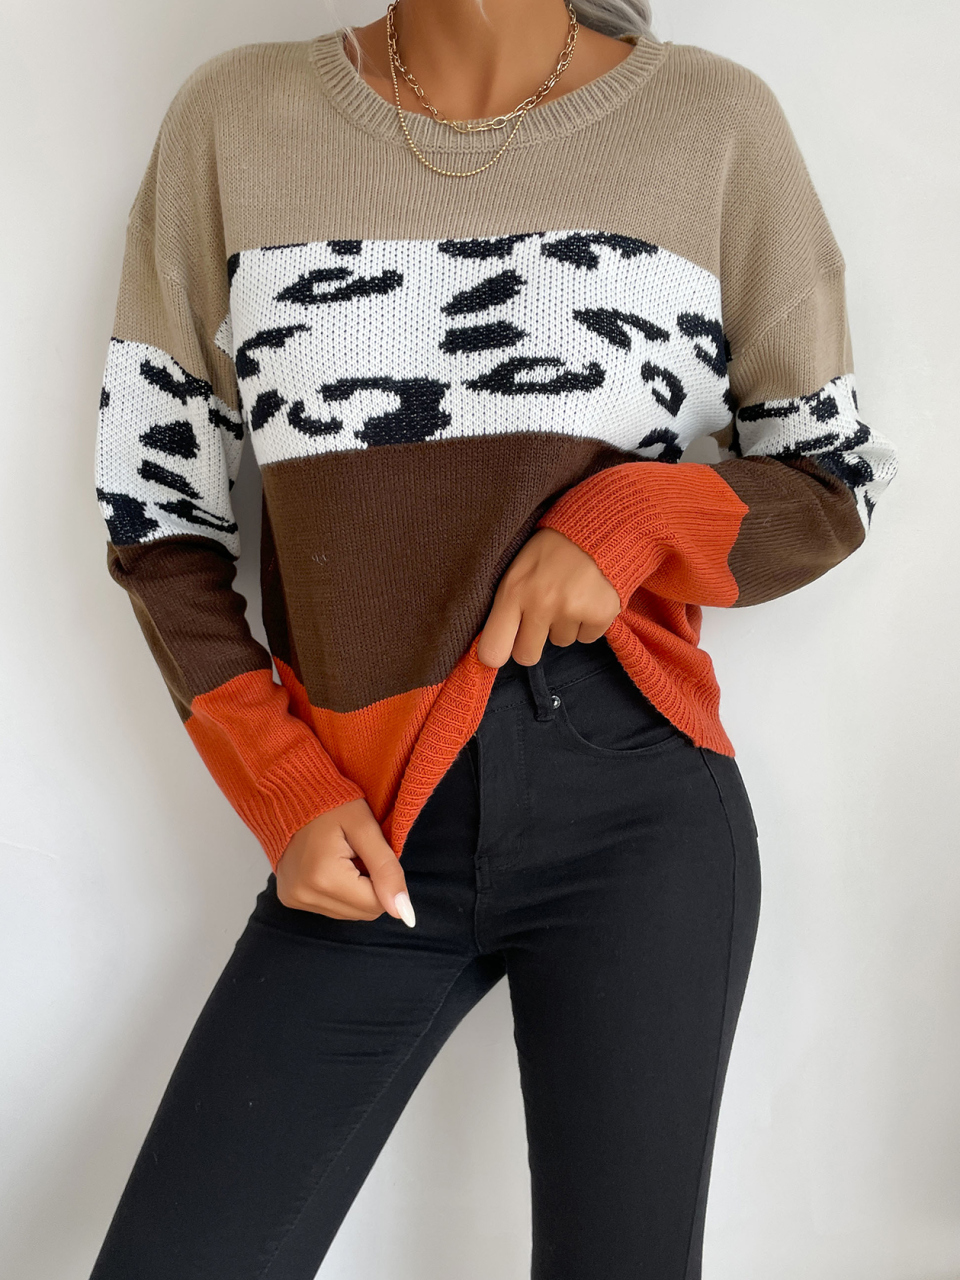 Women's casual fashion trend pullover women's sweater